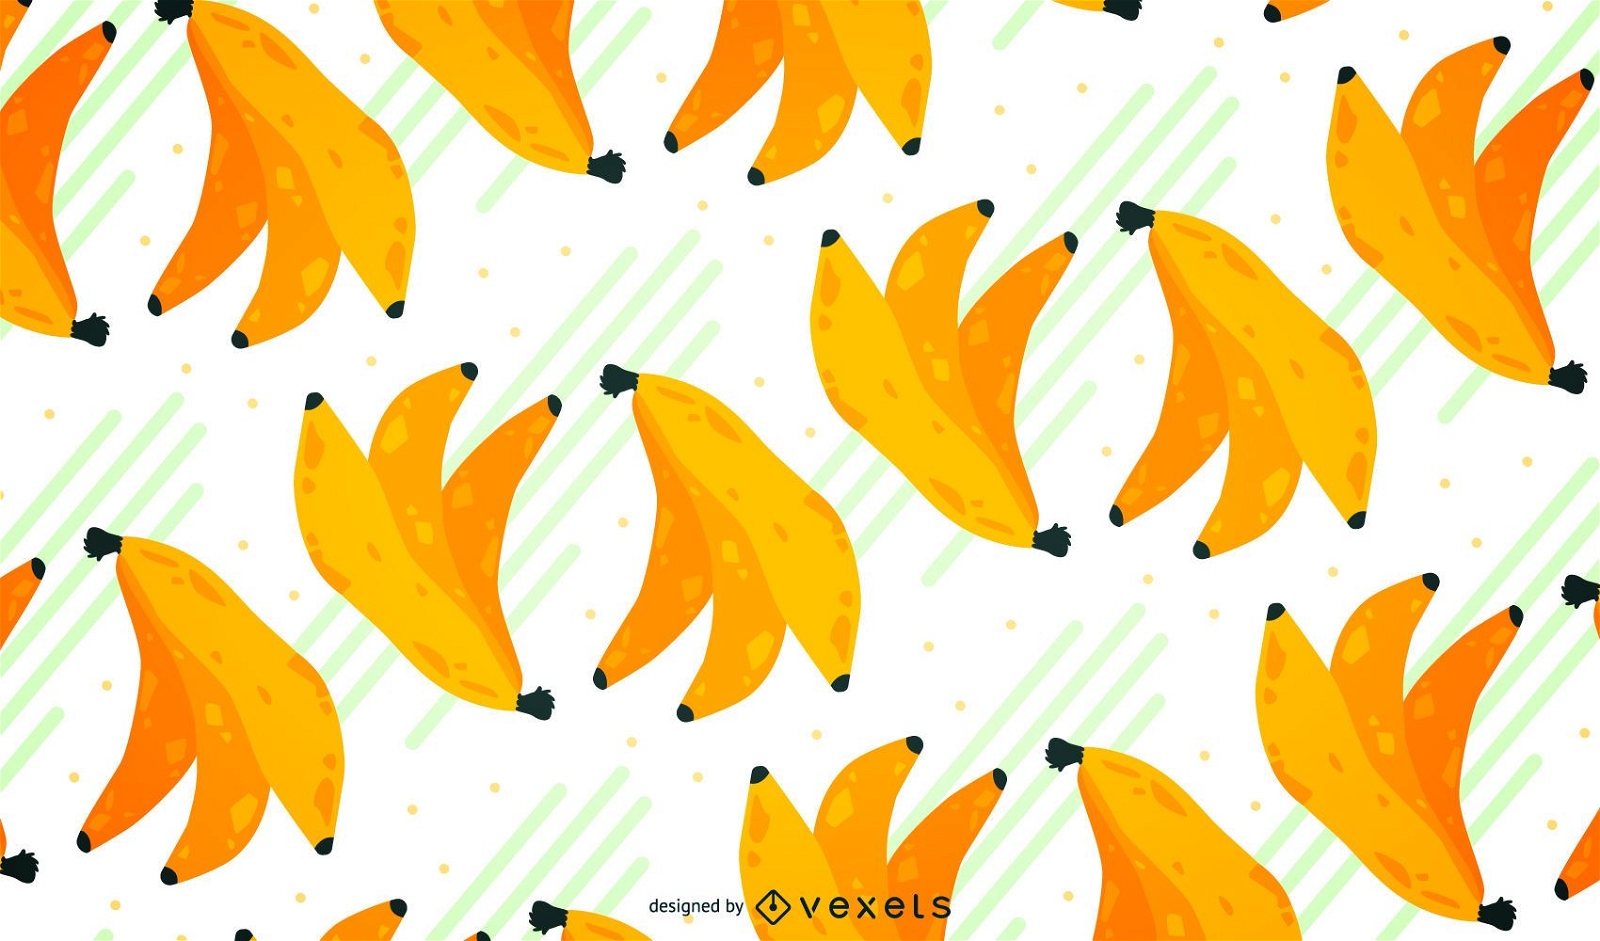 Illustriertes nahtloses Muster der Bananen